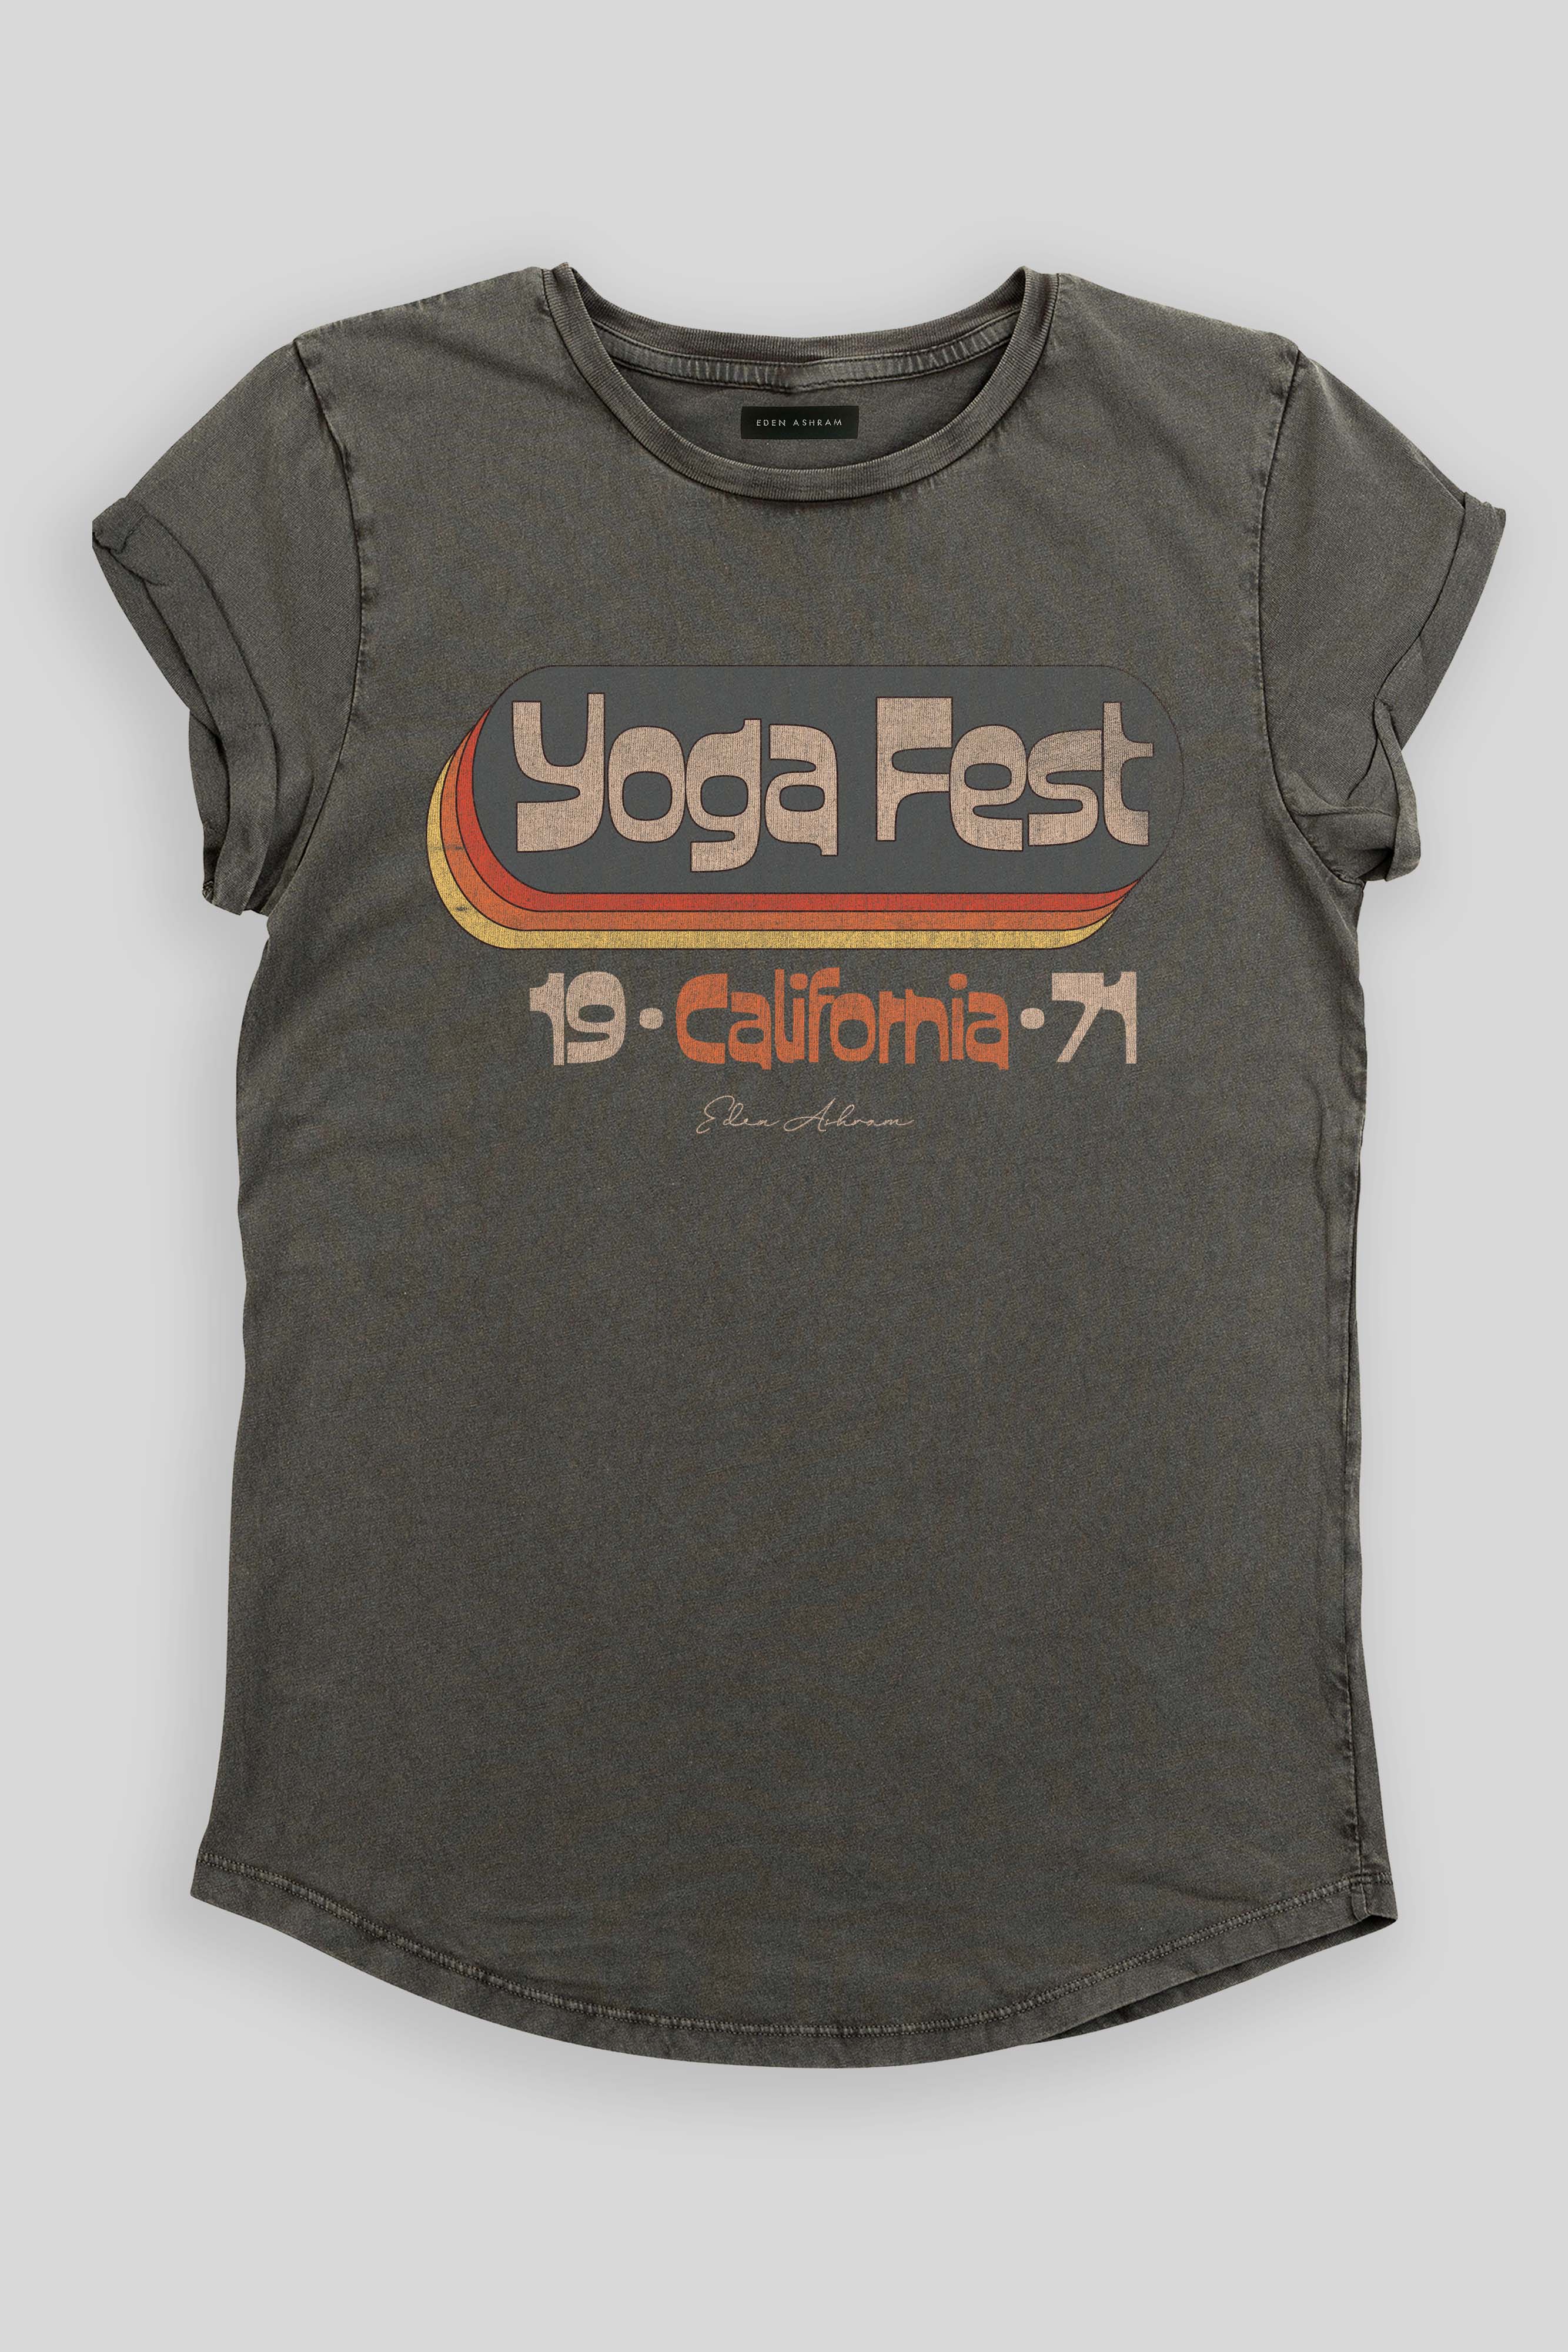 EDEN ASHRAM Yoga Fest Stonewash Rolled Sleeve Tour T-Shirt Stonewash Grey